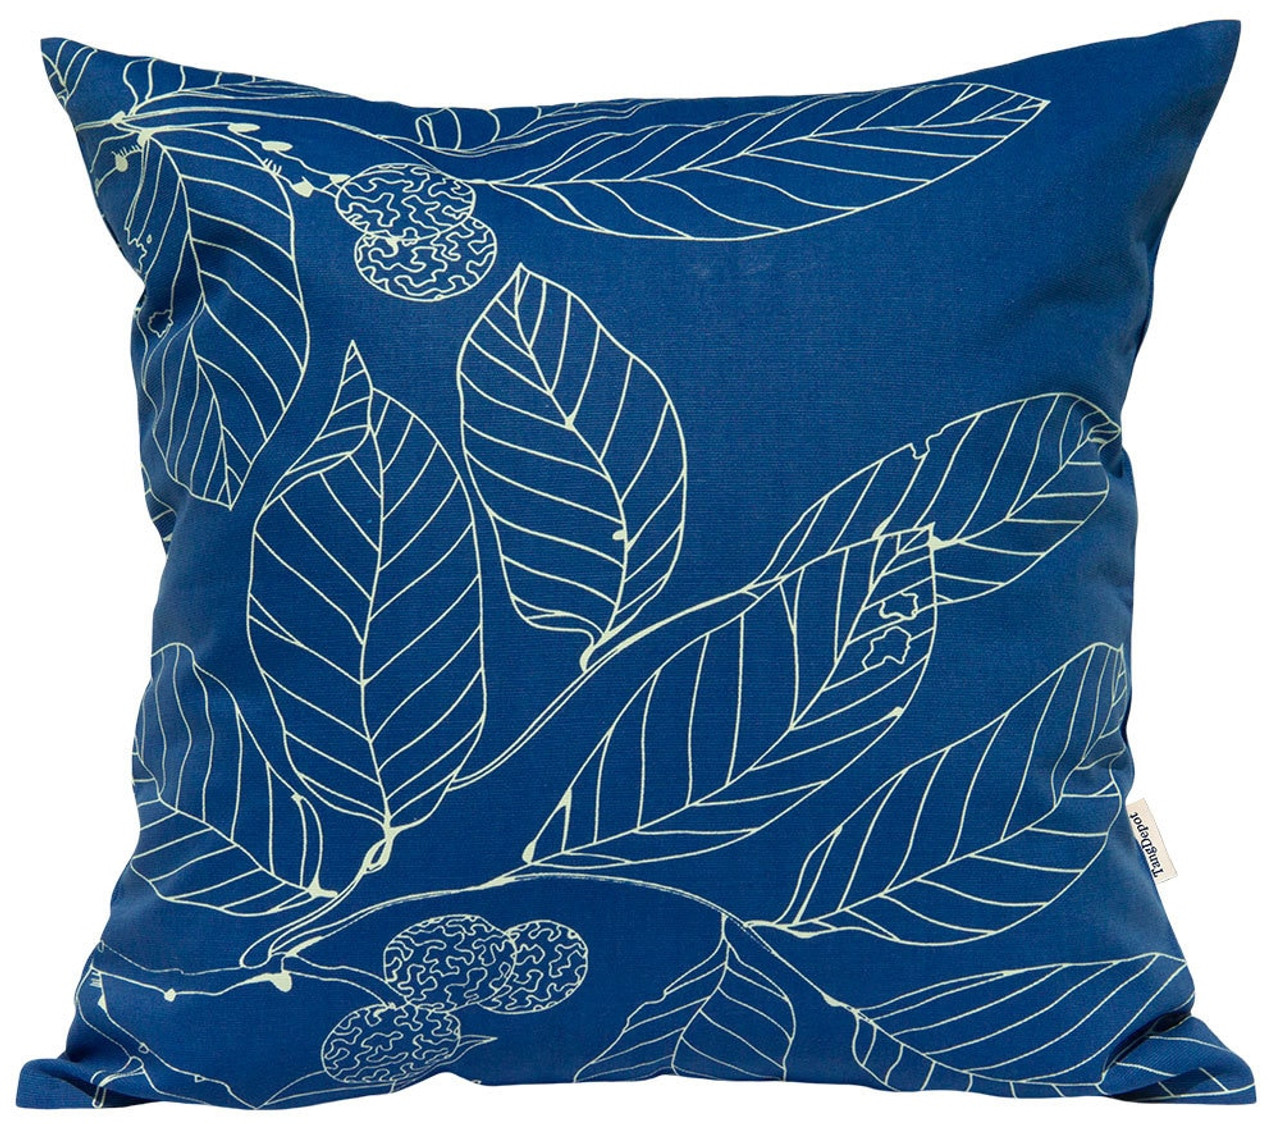 Details about   S4Sassy Cotton Poplin Floral Print Pillow Sham Sofa Cushion Cover 1 Pair 